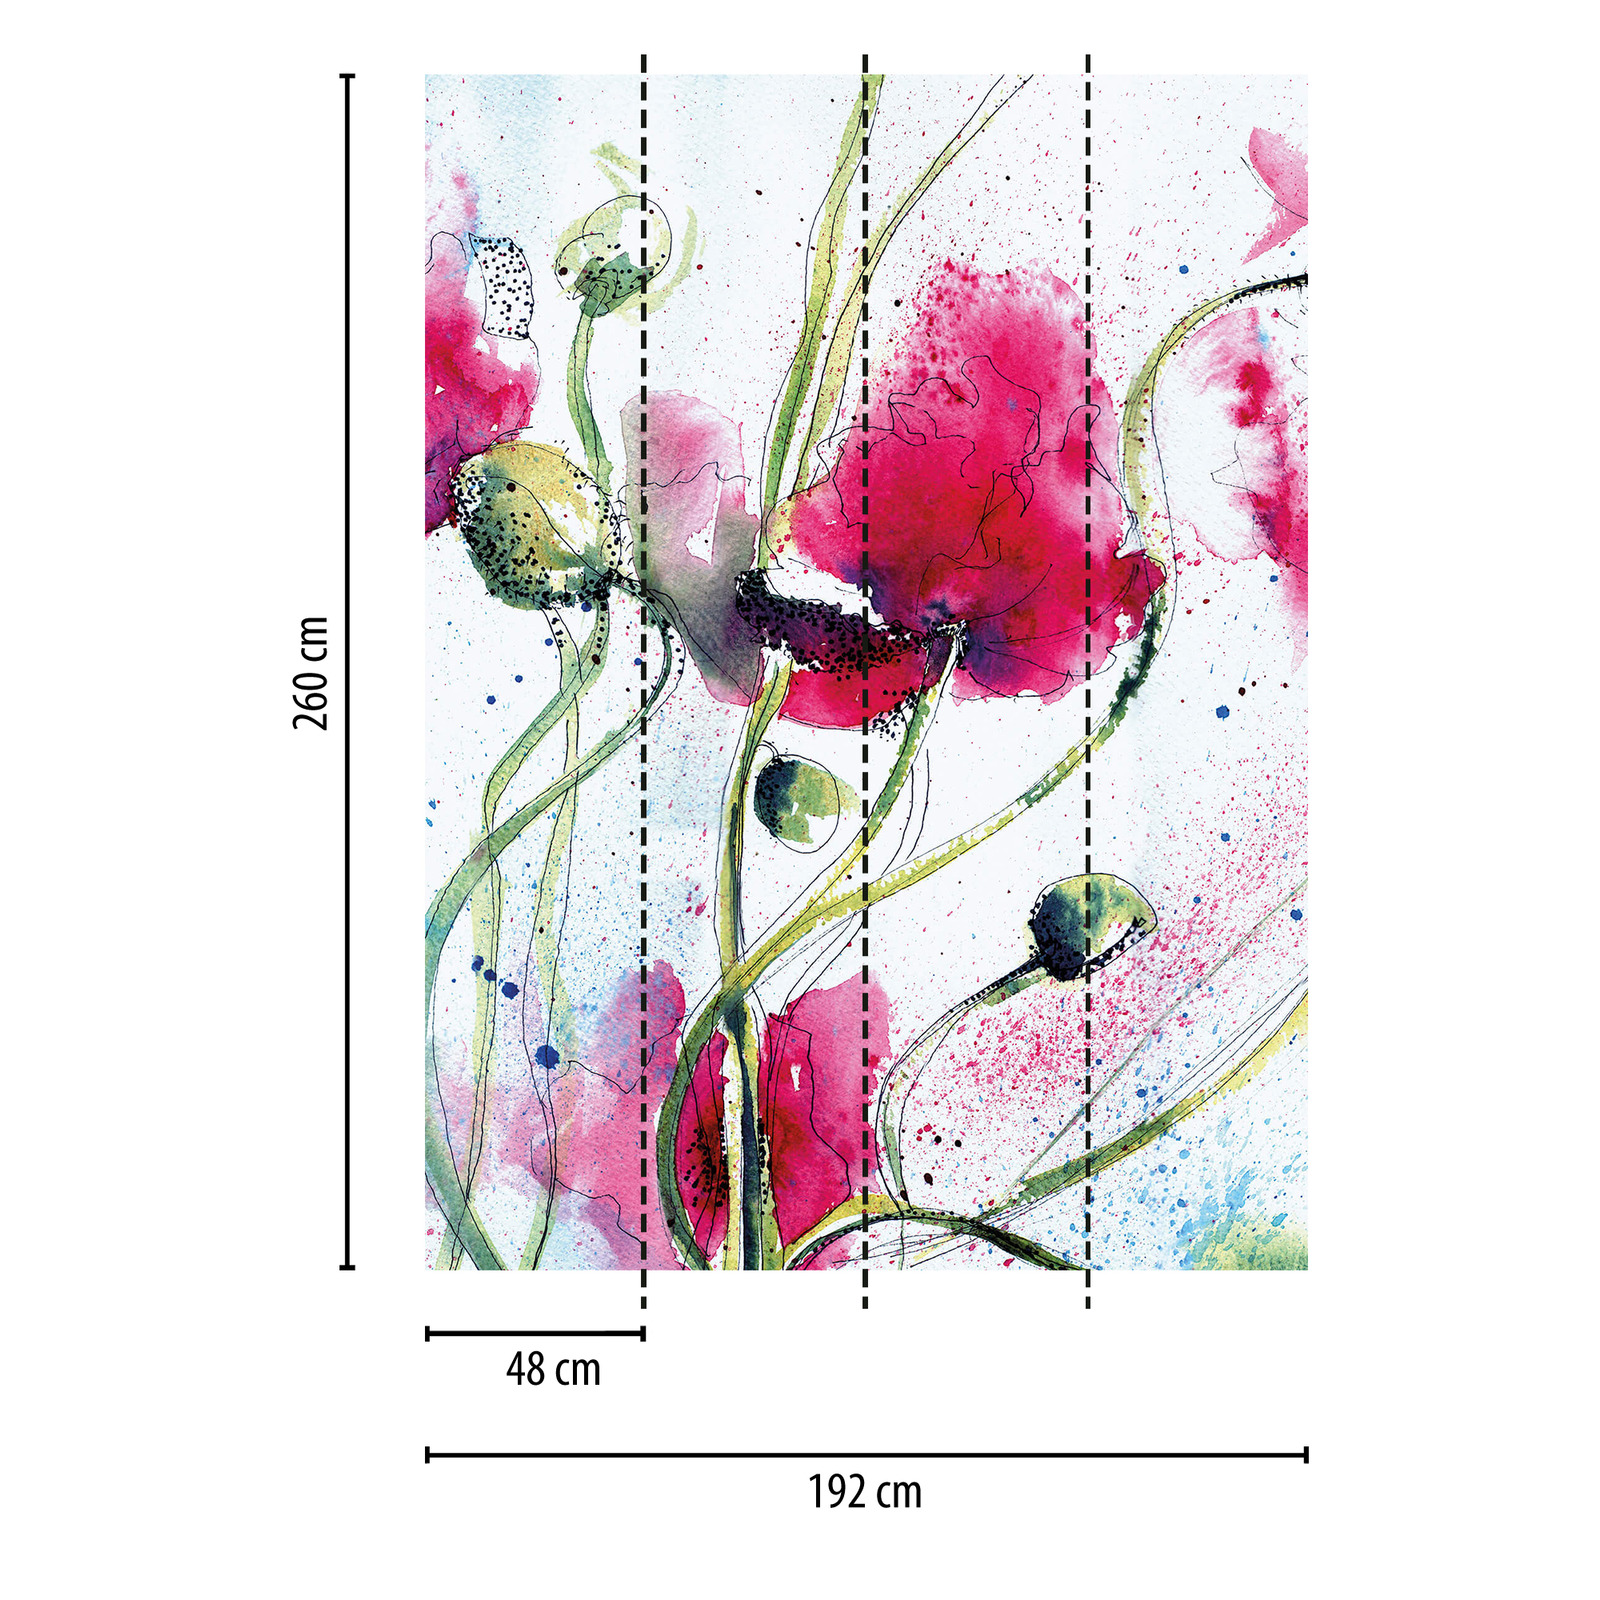             Photo wallpaper narrow drawn flowers - Colorful
        